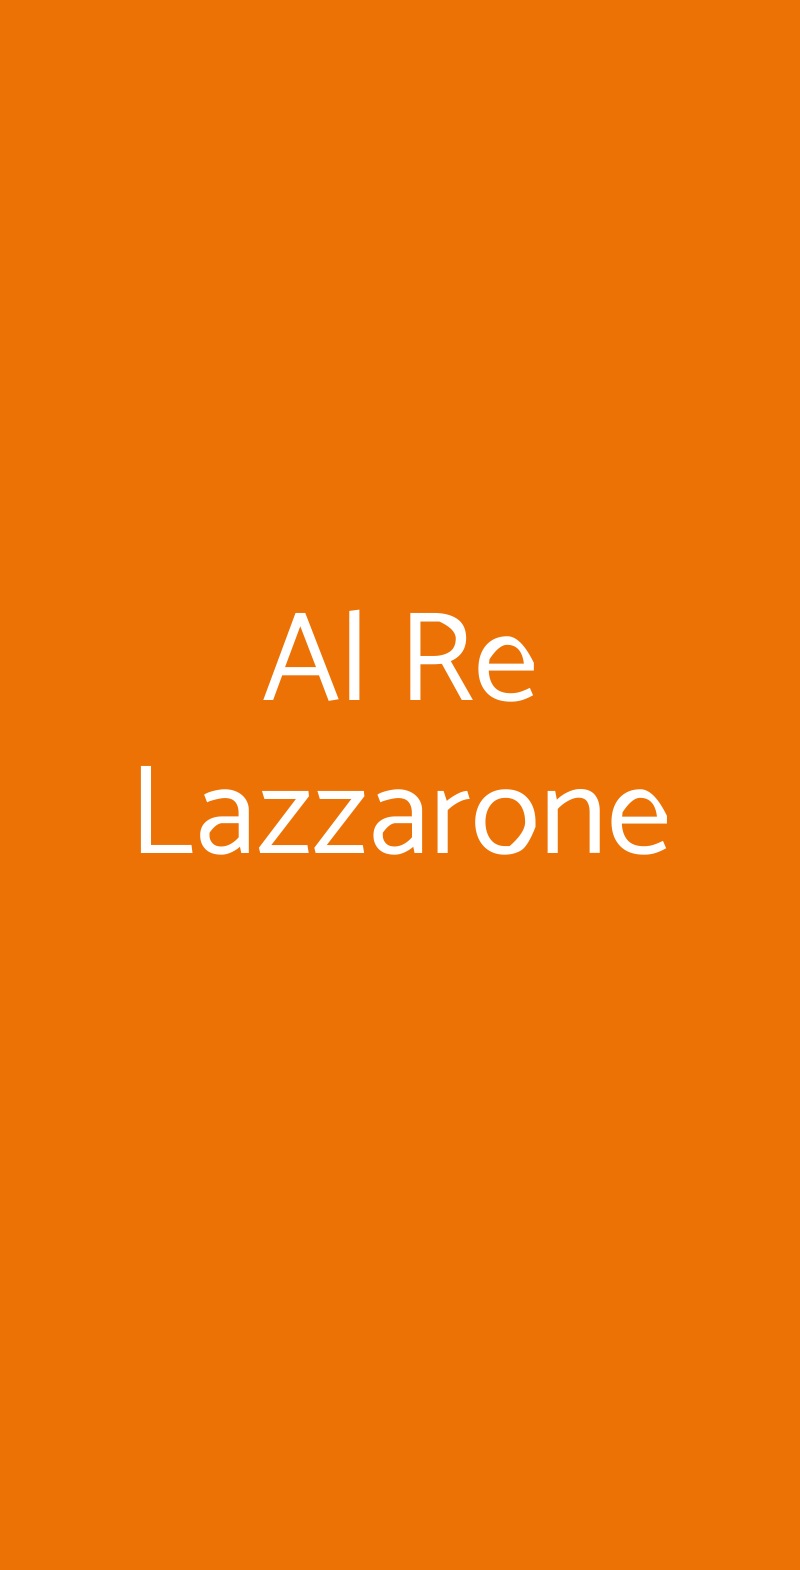 Al Re Lazzarone Monza menù 1 pagina